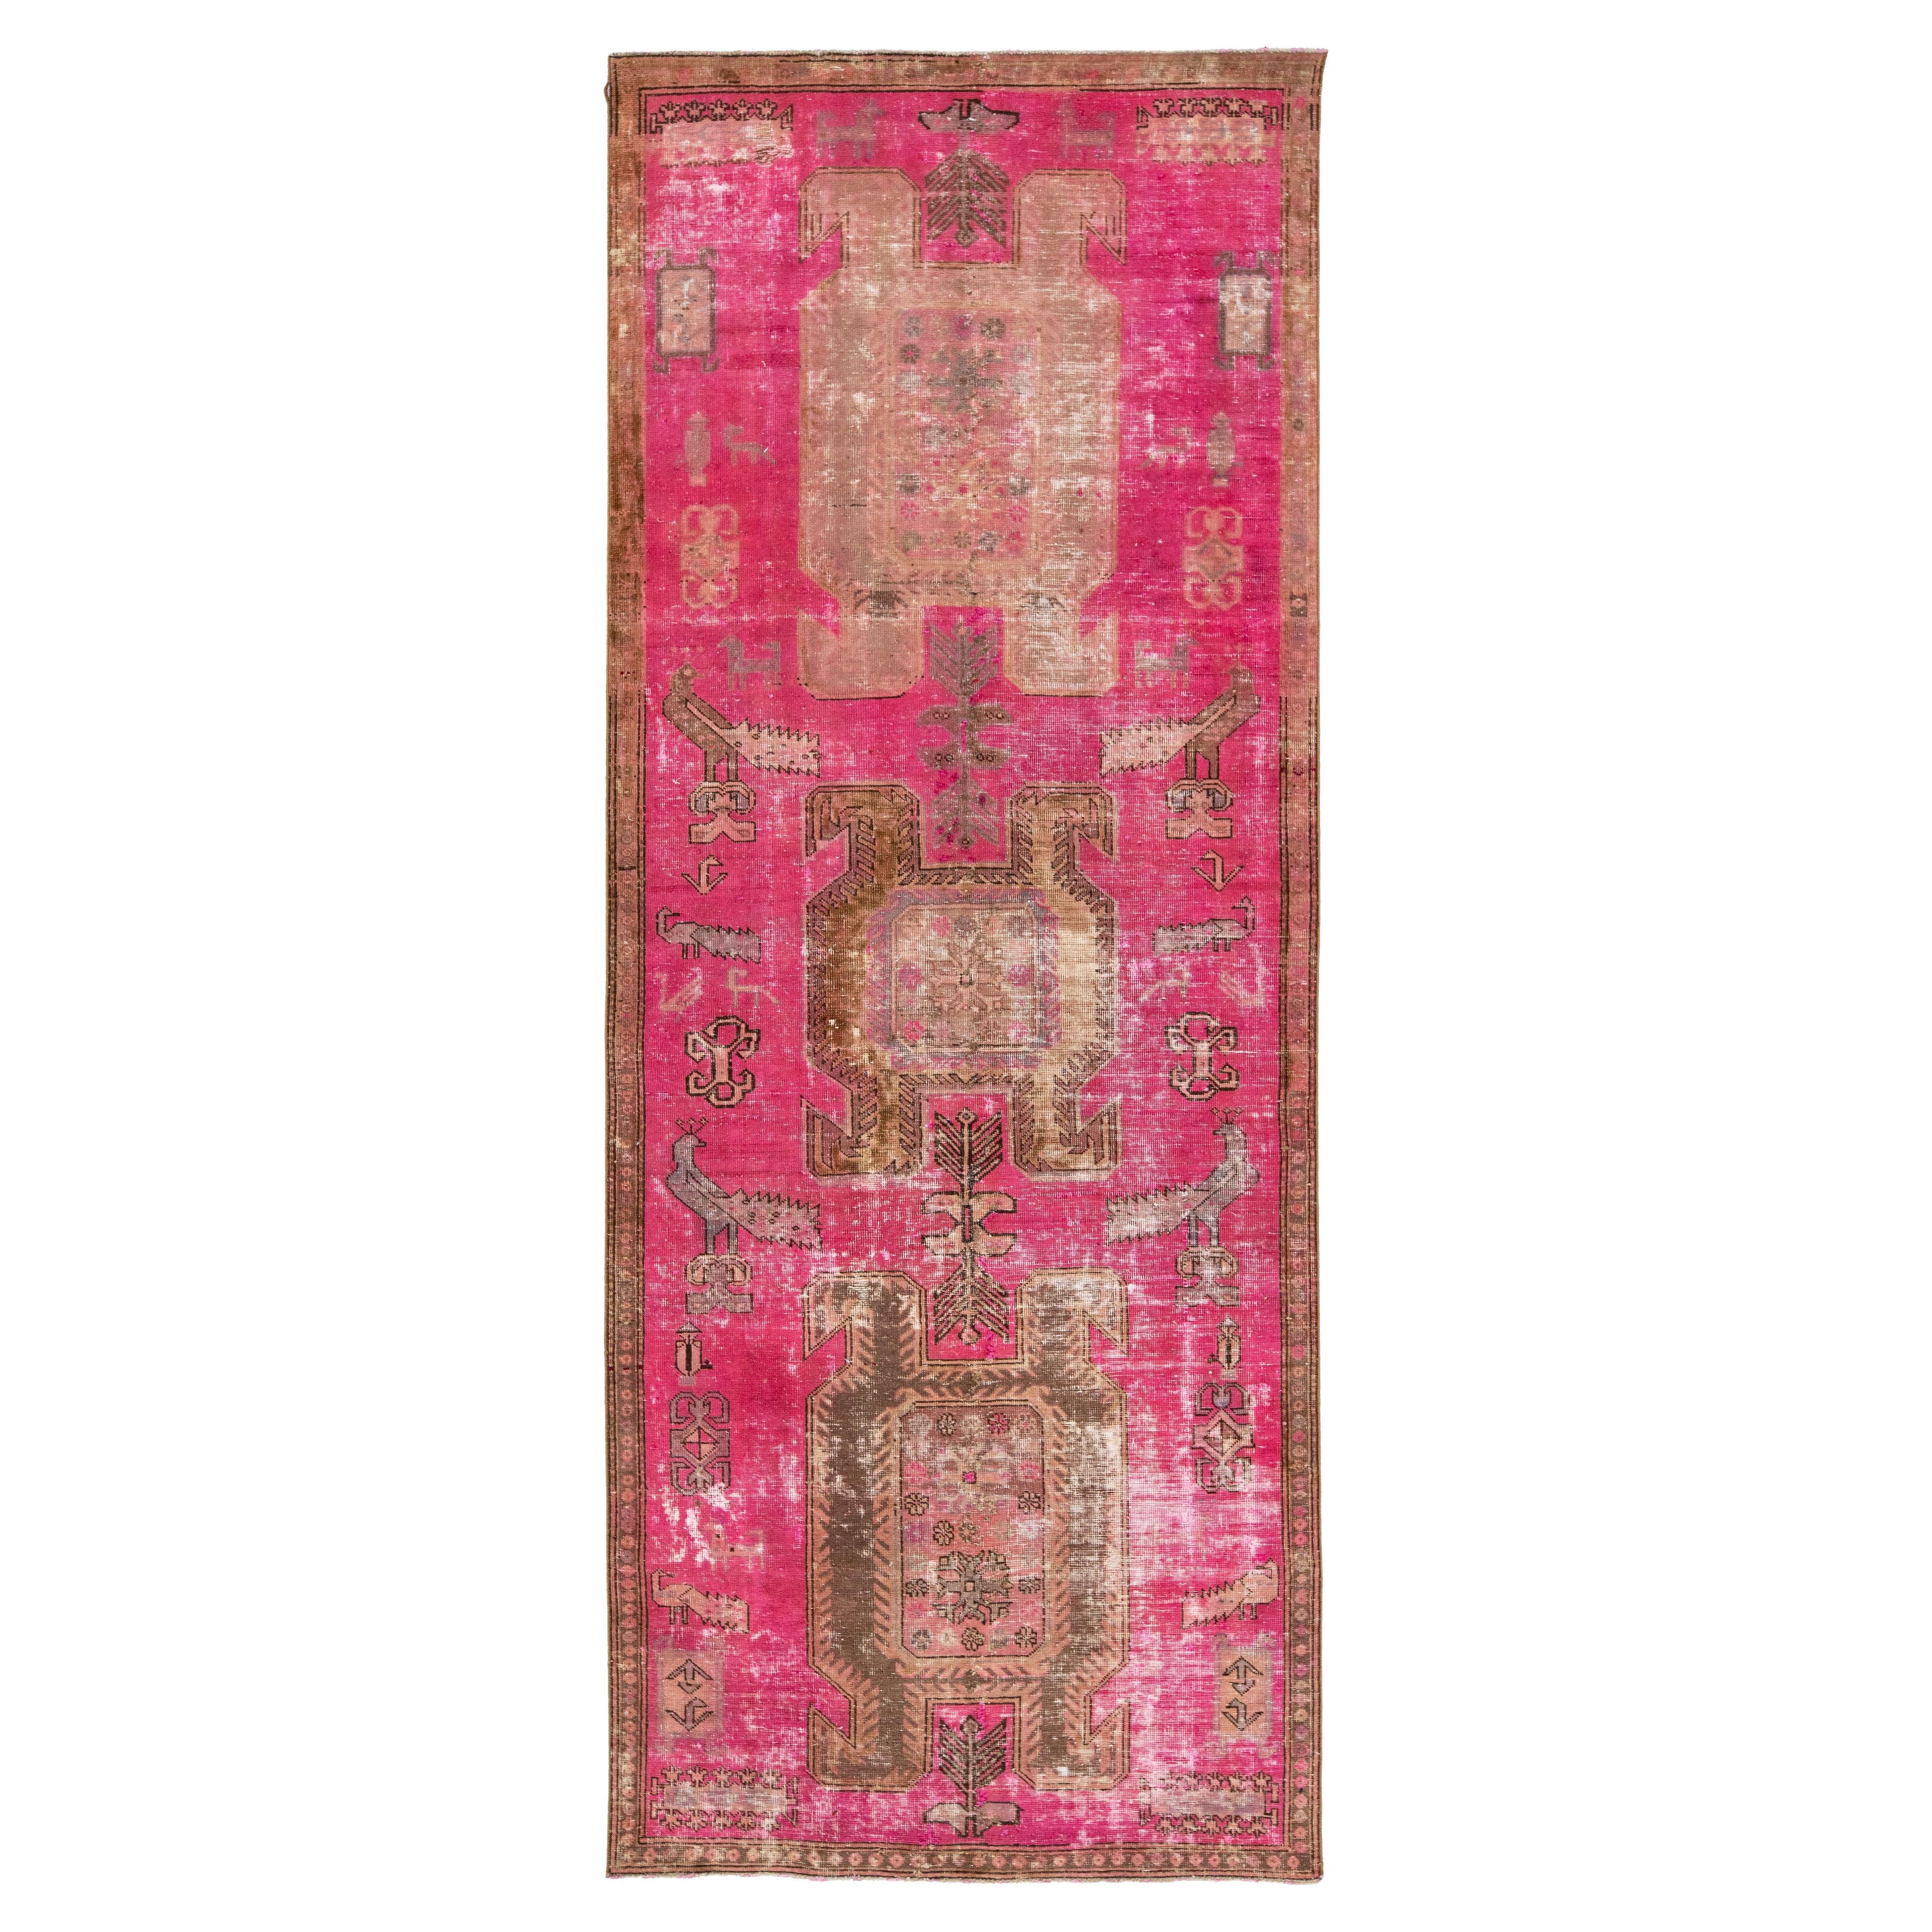 Tapis persan vieilli rose avec motif tribal